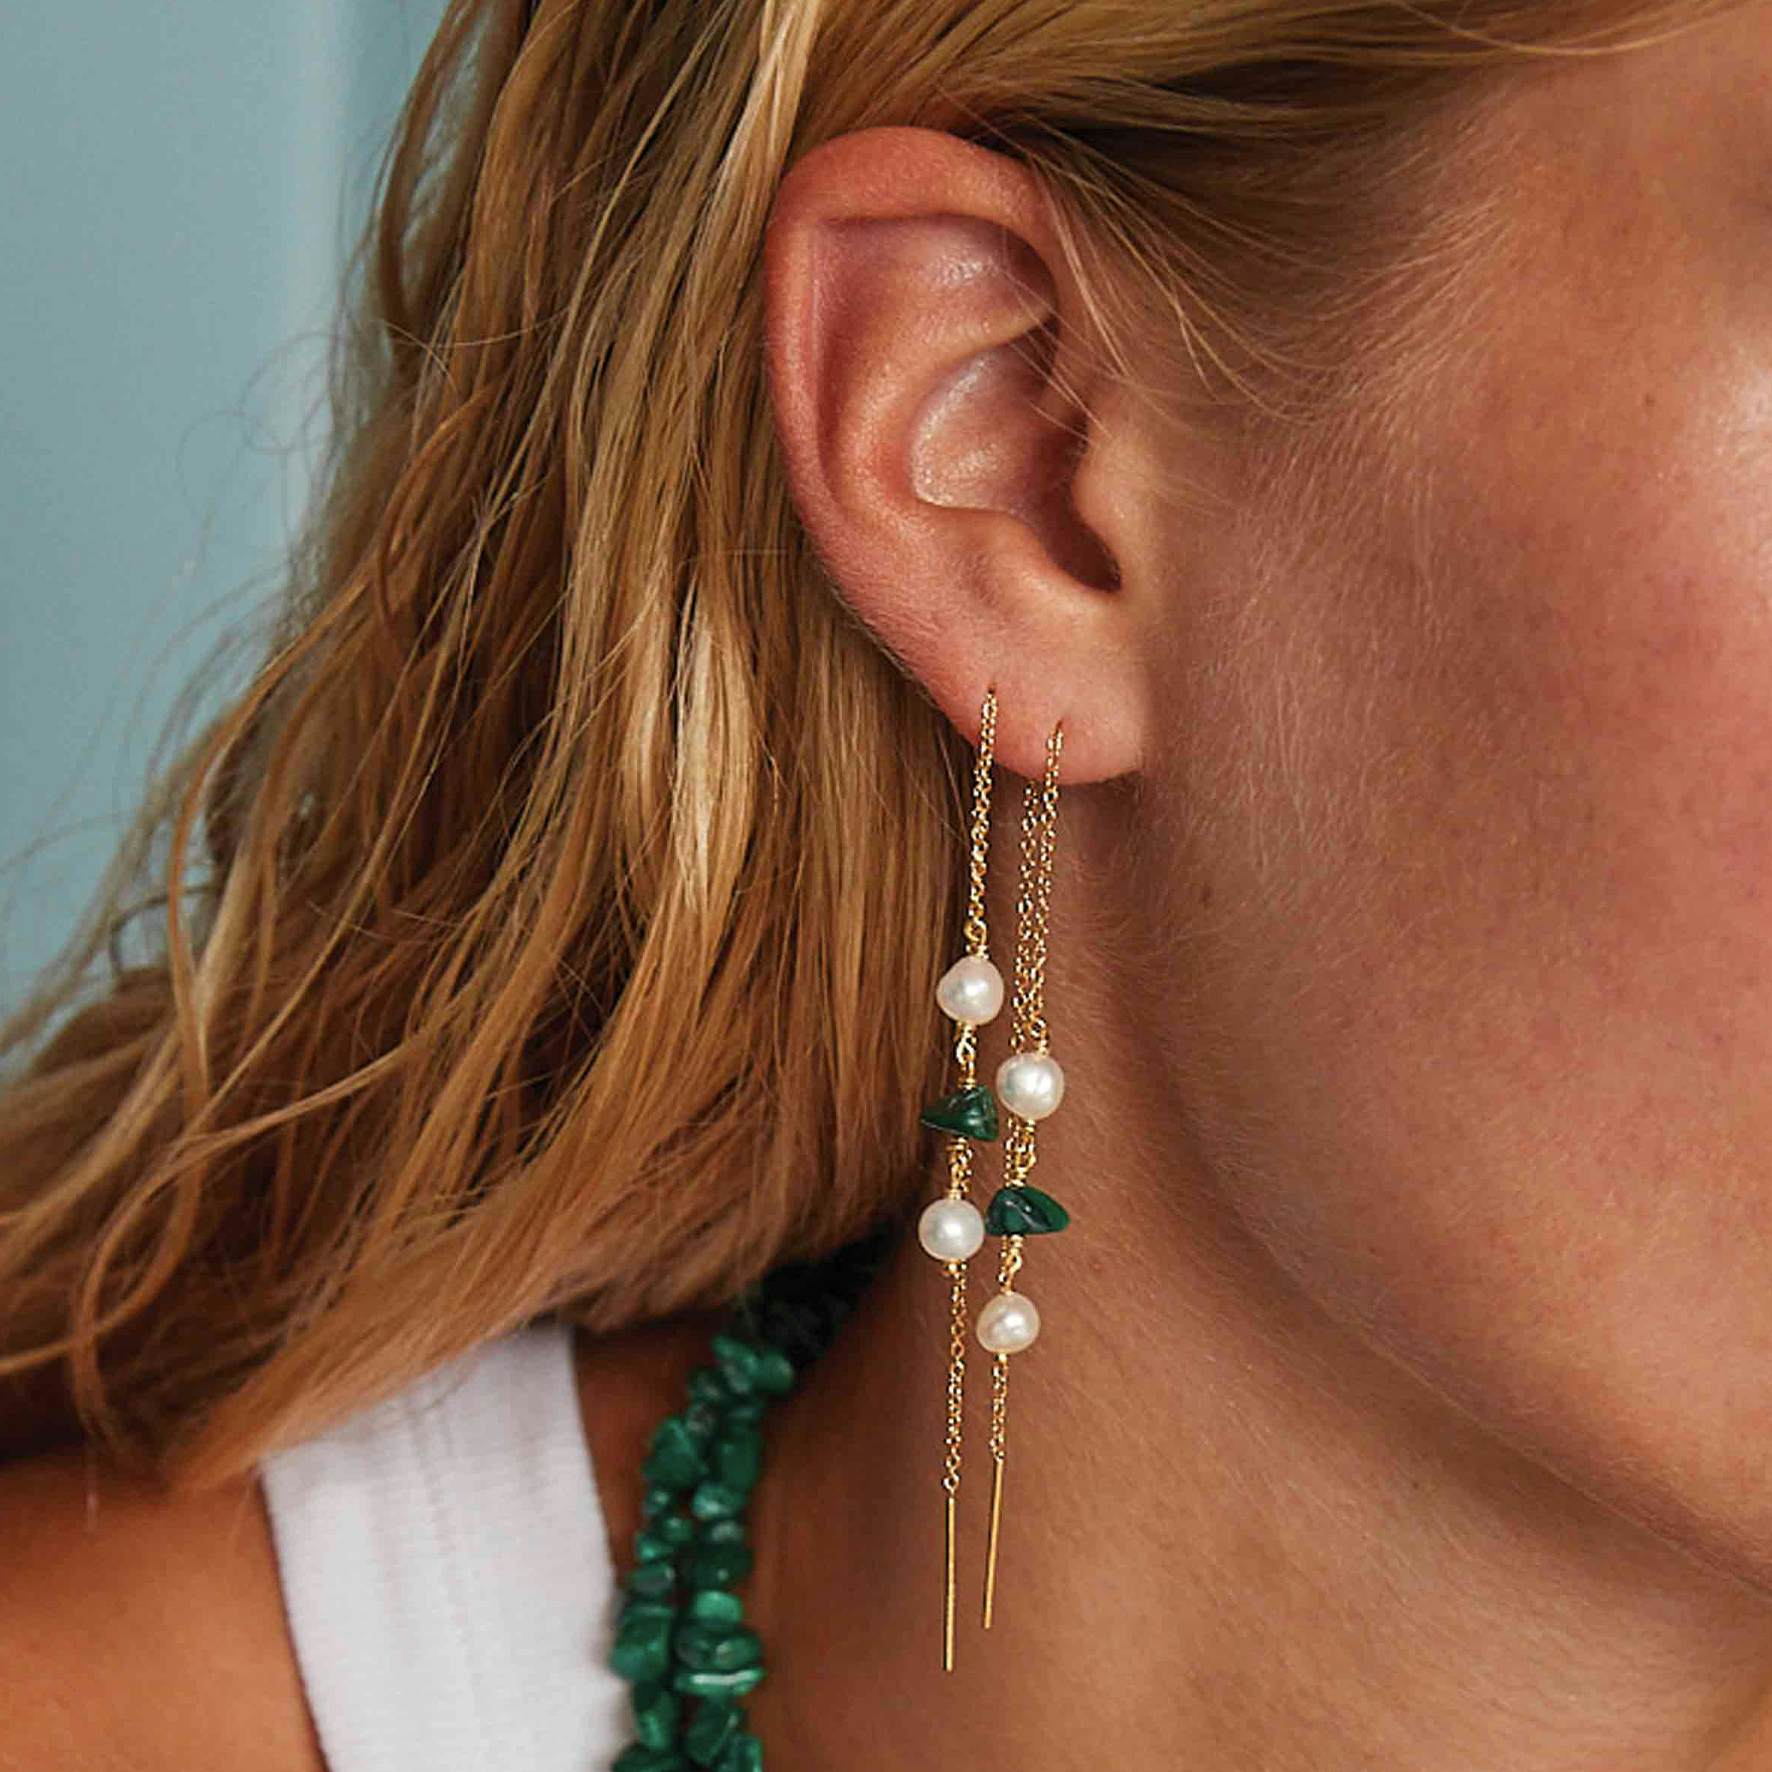 Green Ellie Earrings from Hultquist Copenhagen in Goldplated-Silver Sterling 925| ,Freshwater Pearl|Blank